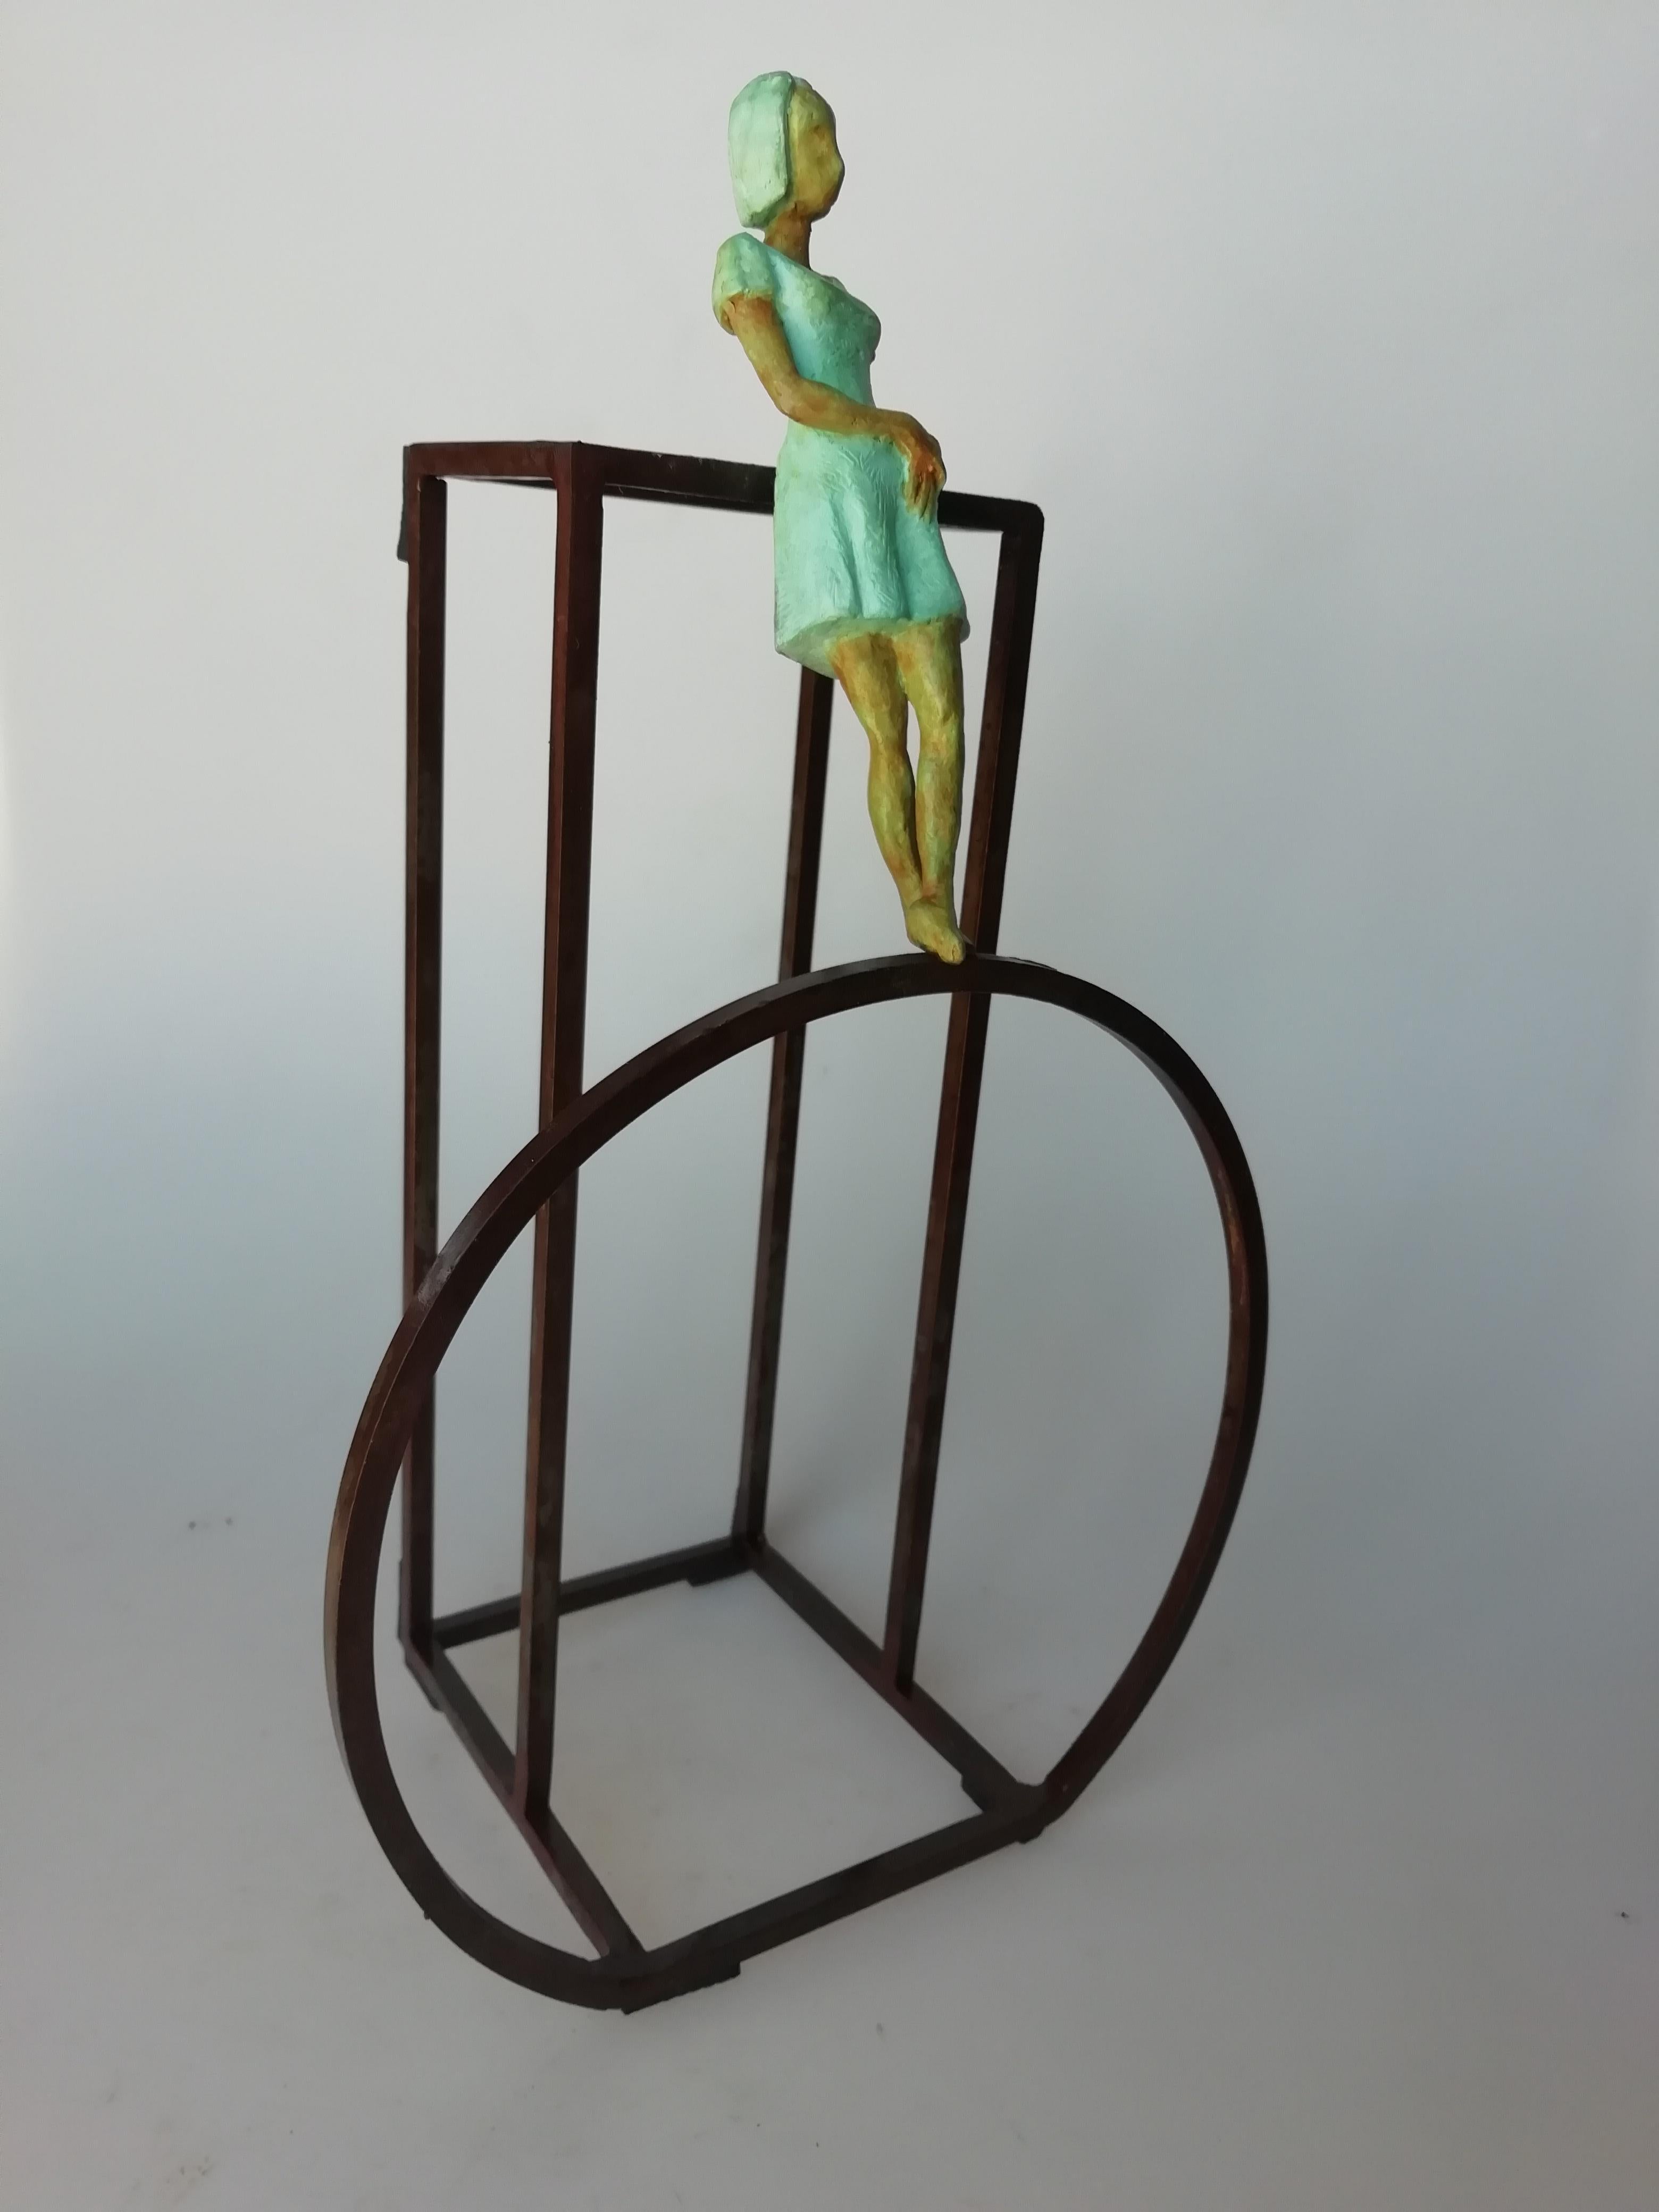 Joan Artigas Planas Figurative Sculpture - "Viewpoint II" contemporary bronze table, mural sculpture figurative girl 